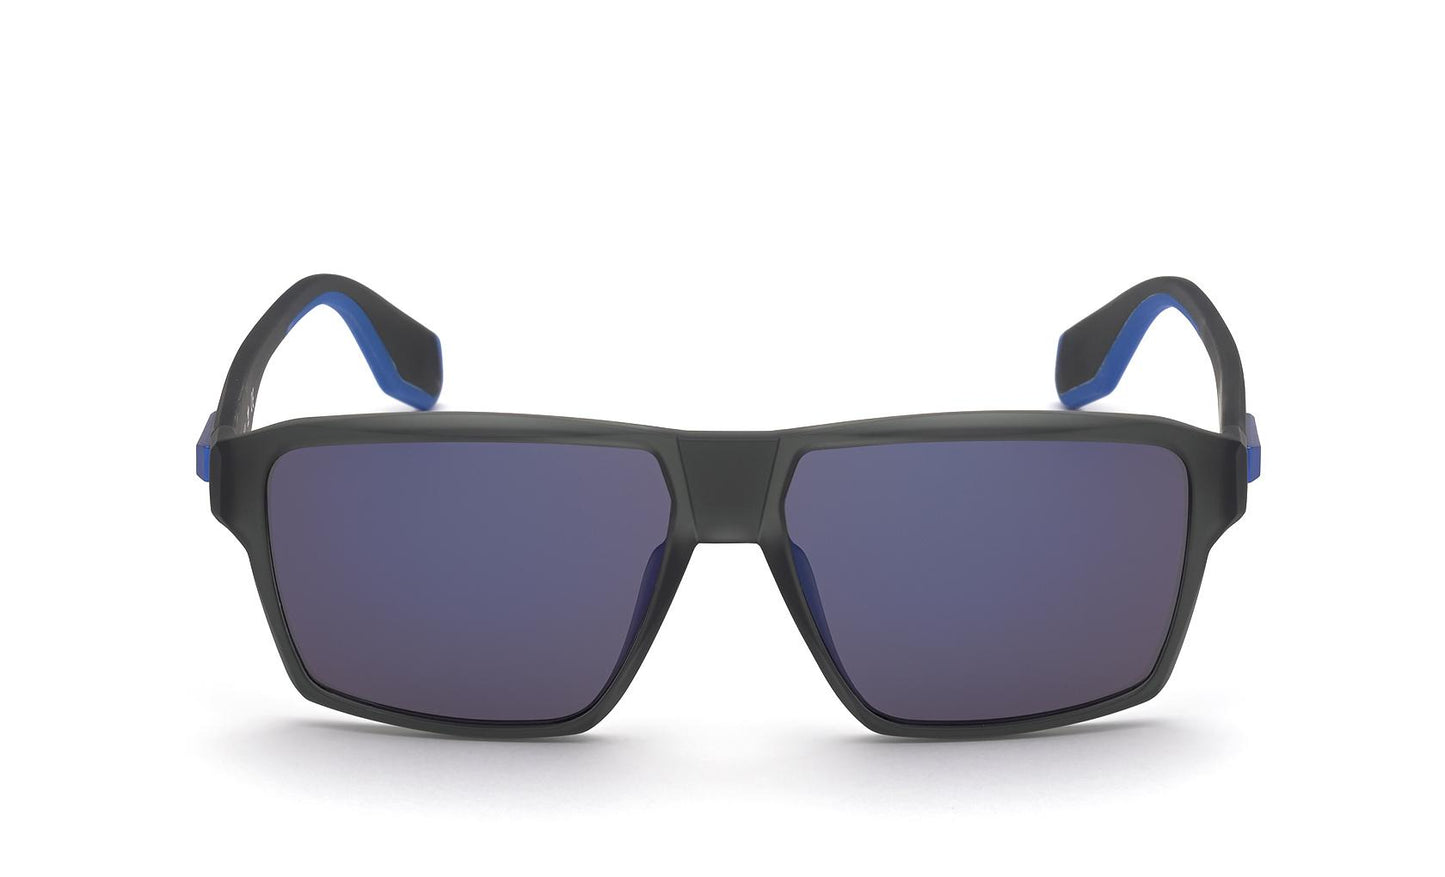 Adidas Originals Sunglasses OR0039 20X